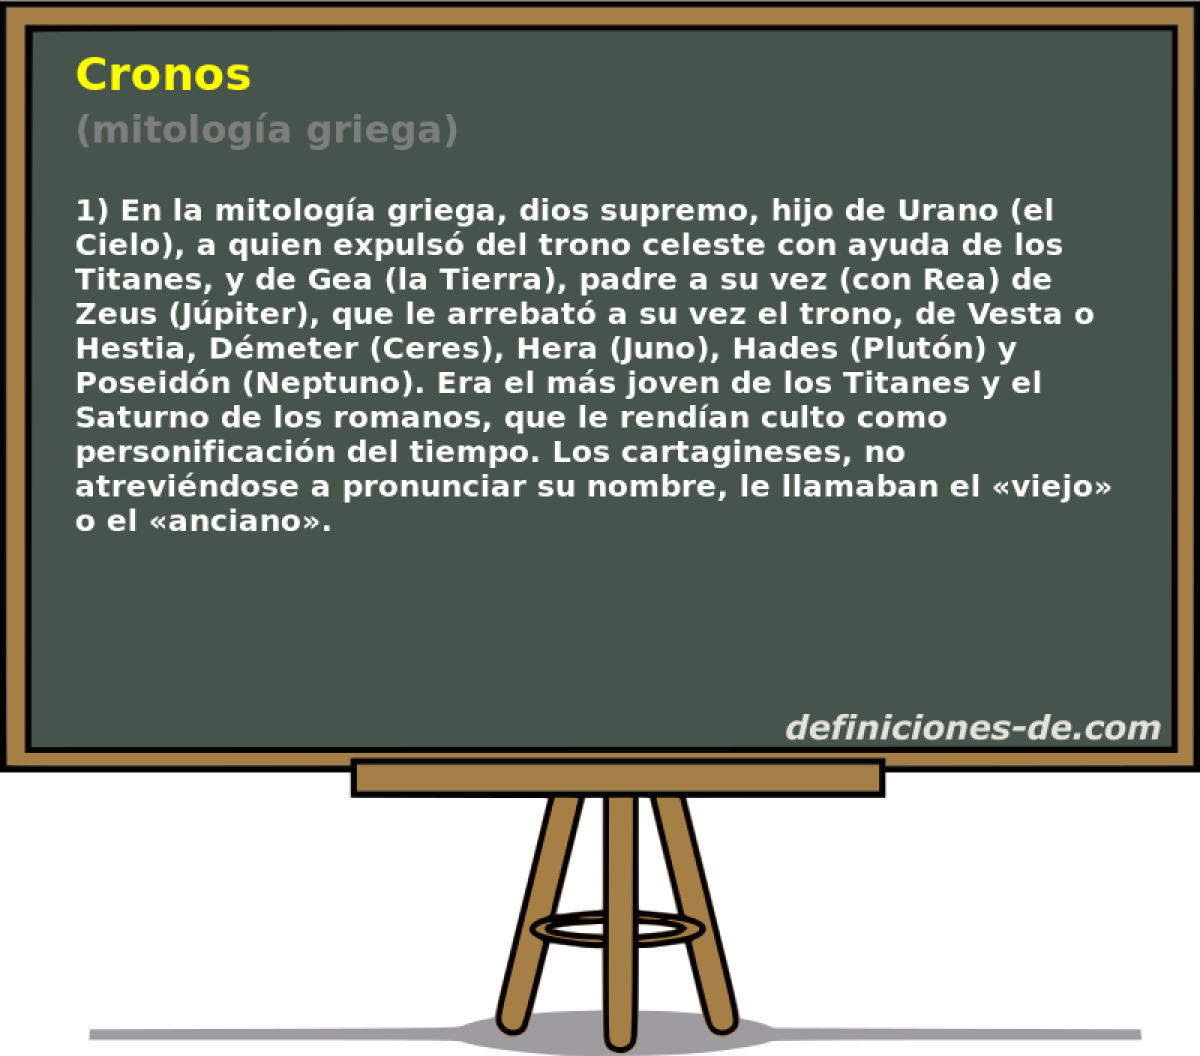 Cronos (mitologa griega)